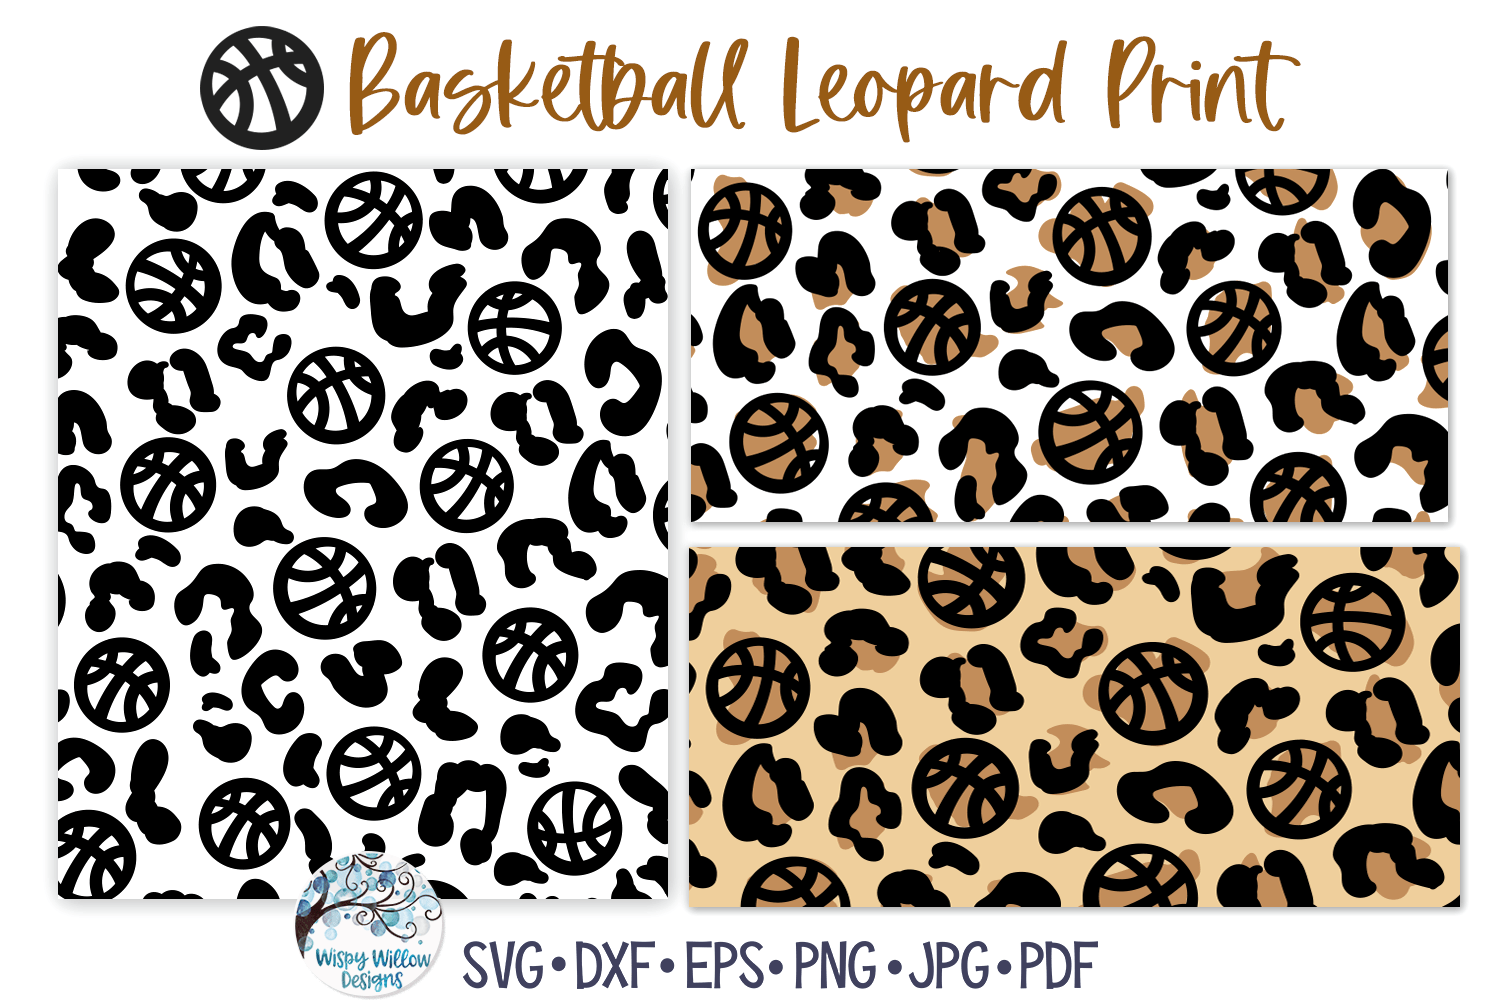 Basketball Leopard Print SVG | Sport Animal Pattern Wispy Willow Designs Company